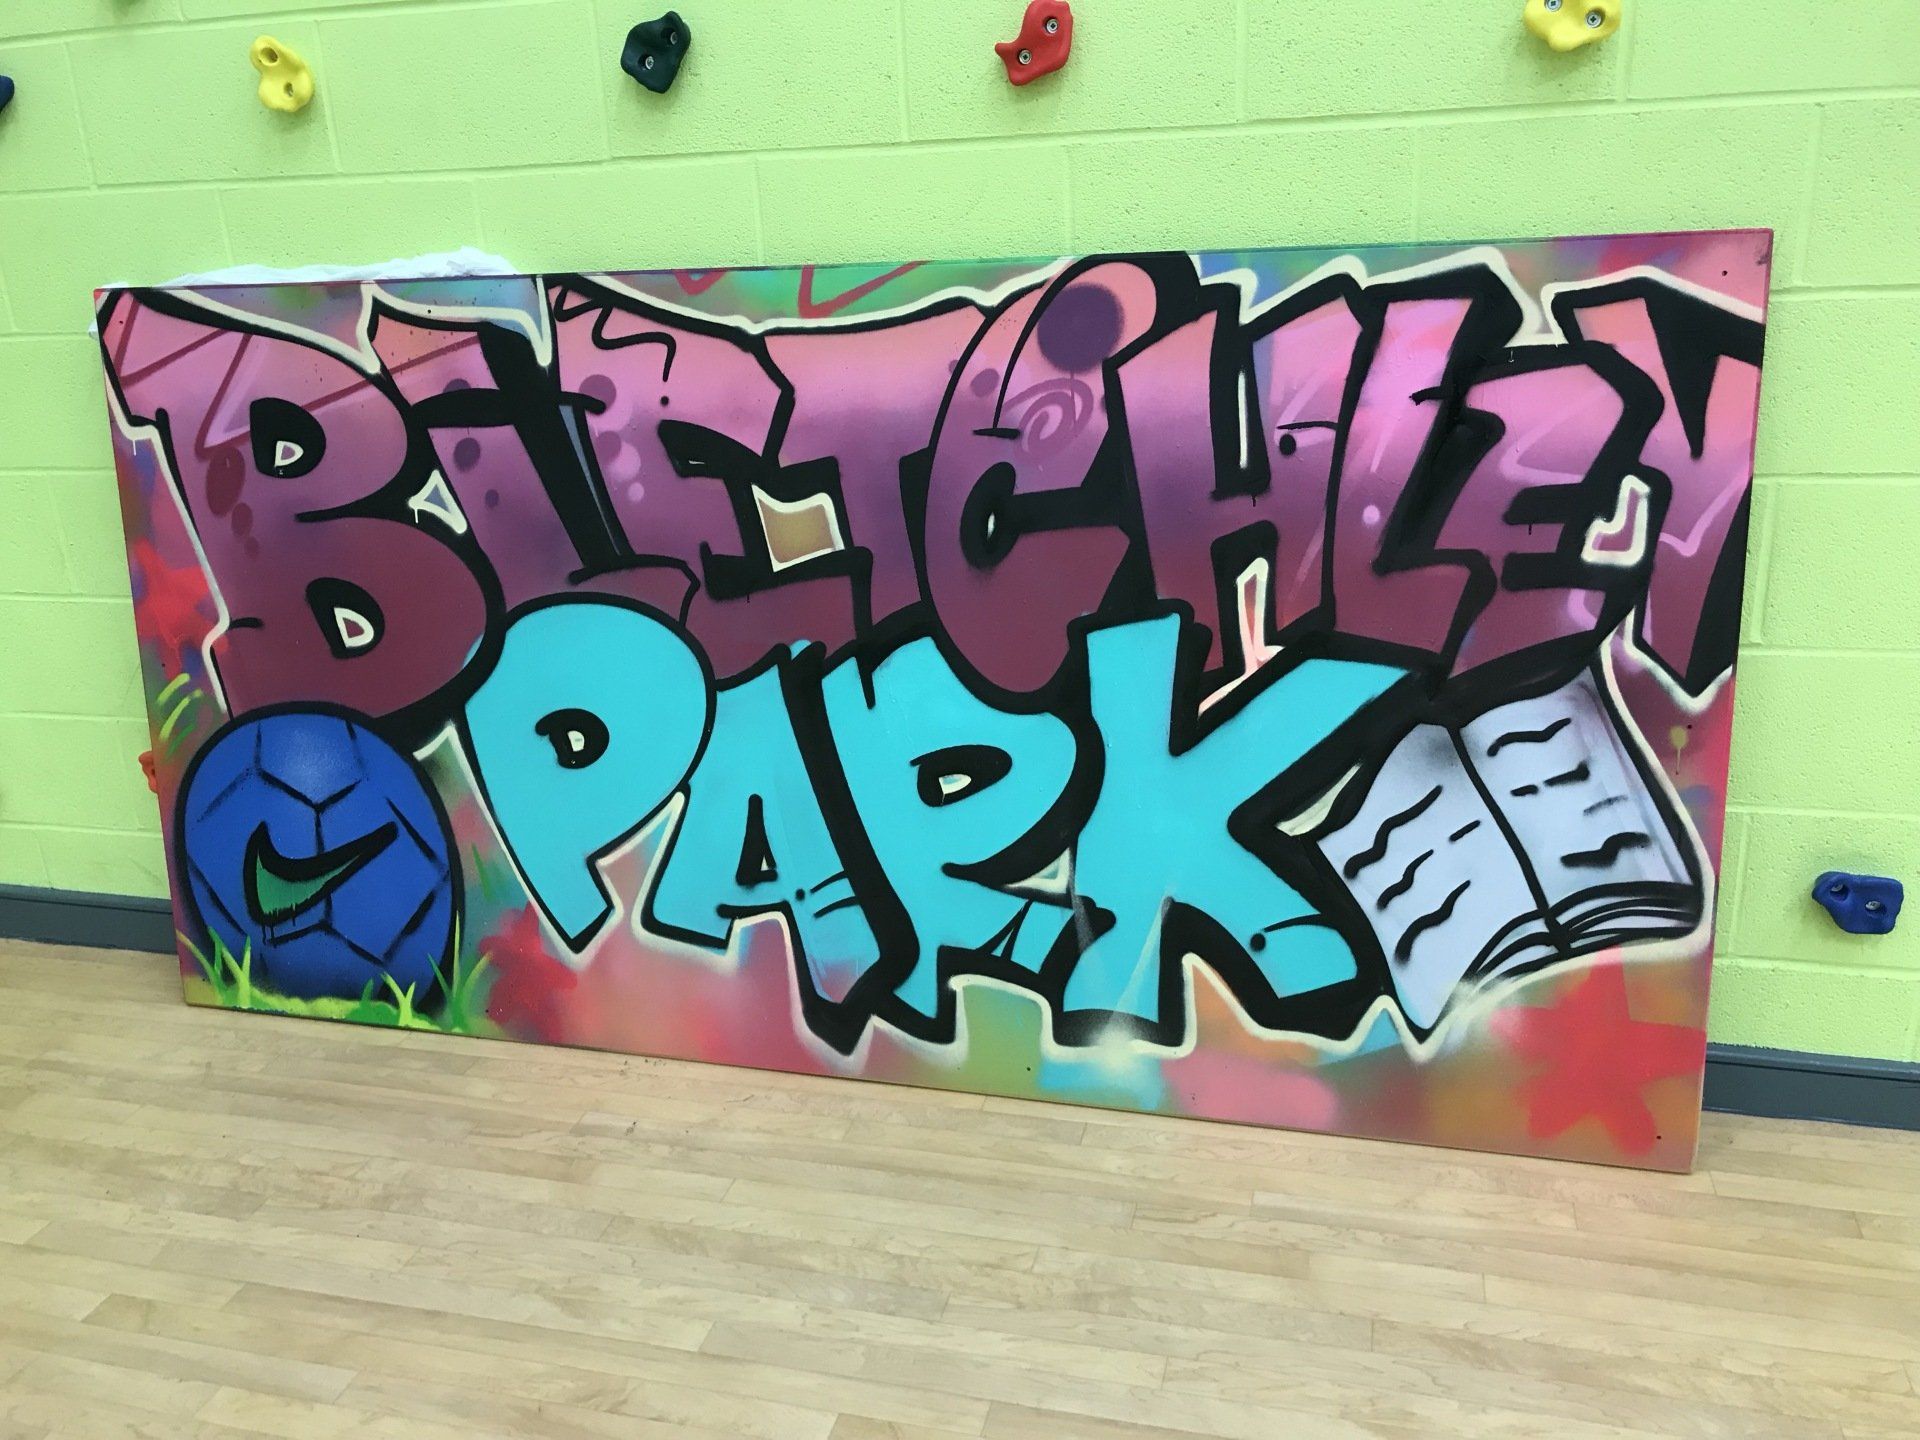 Bletchley Park school workshops